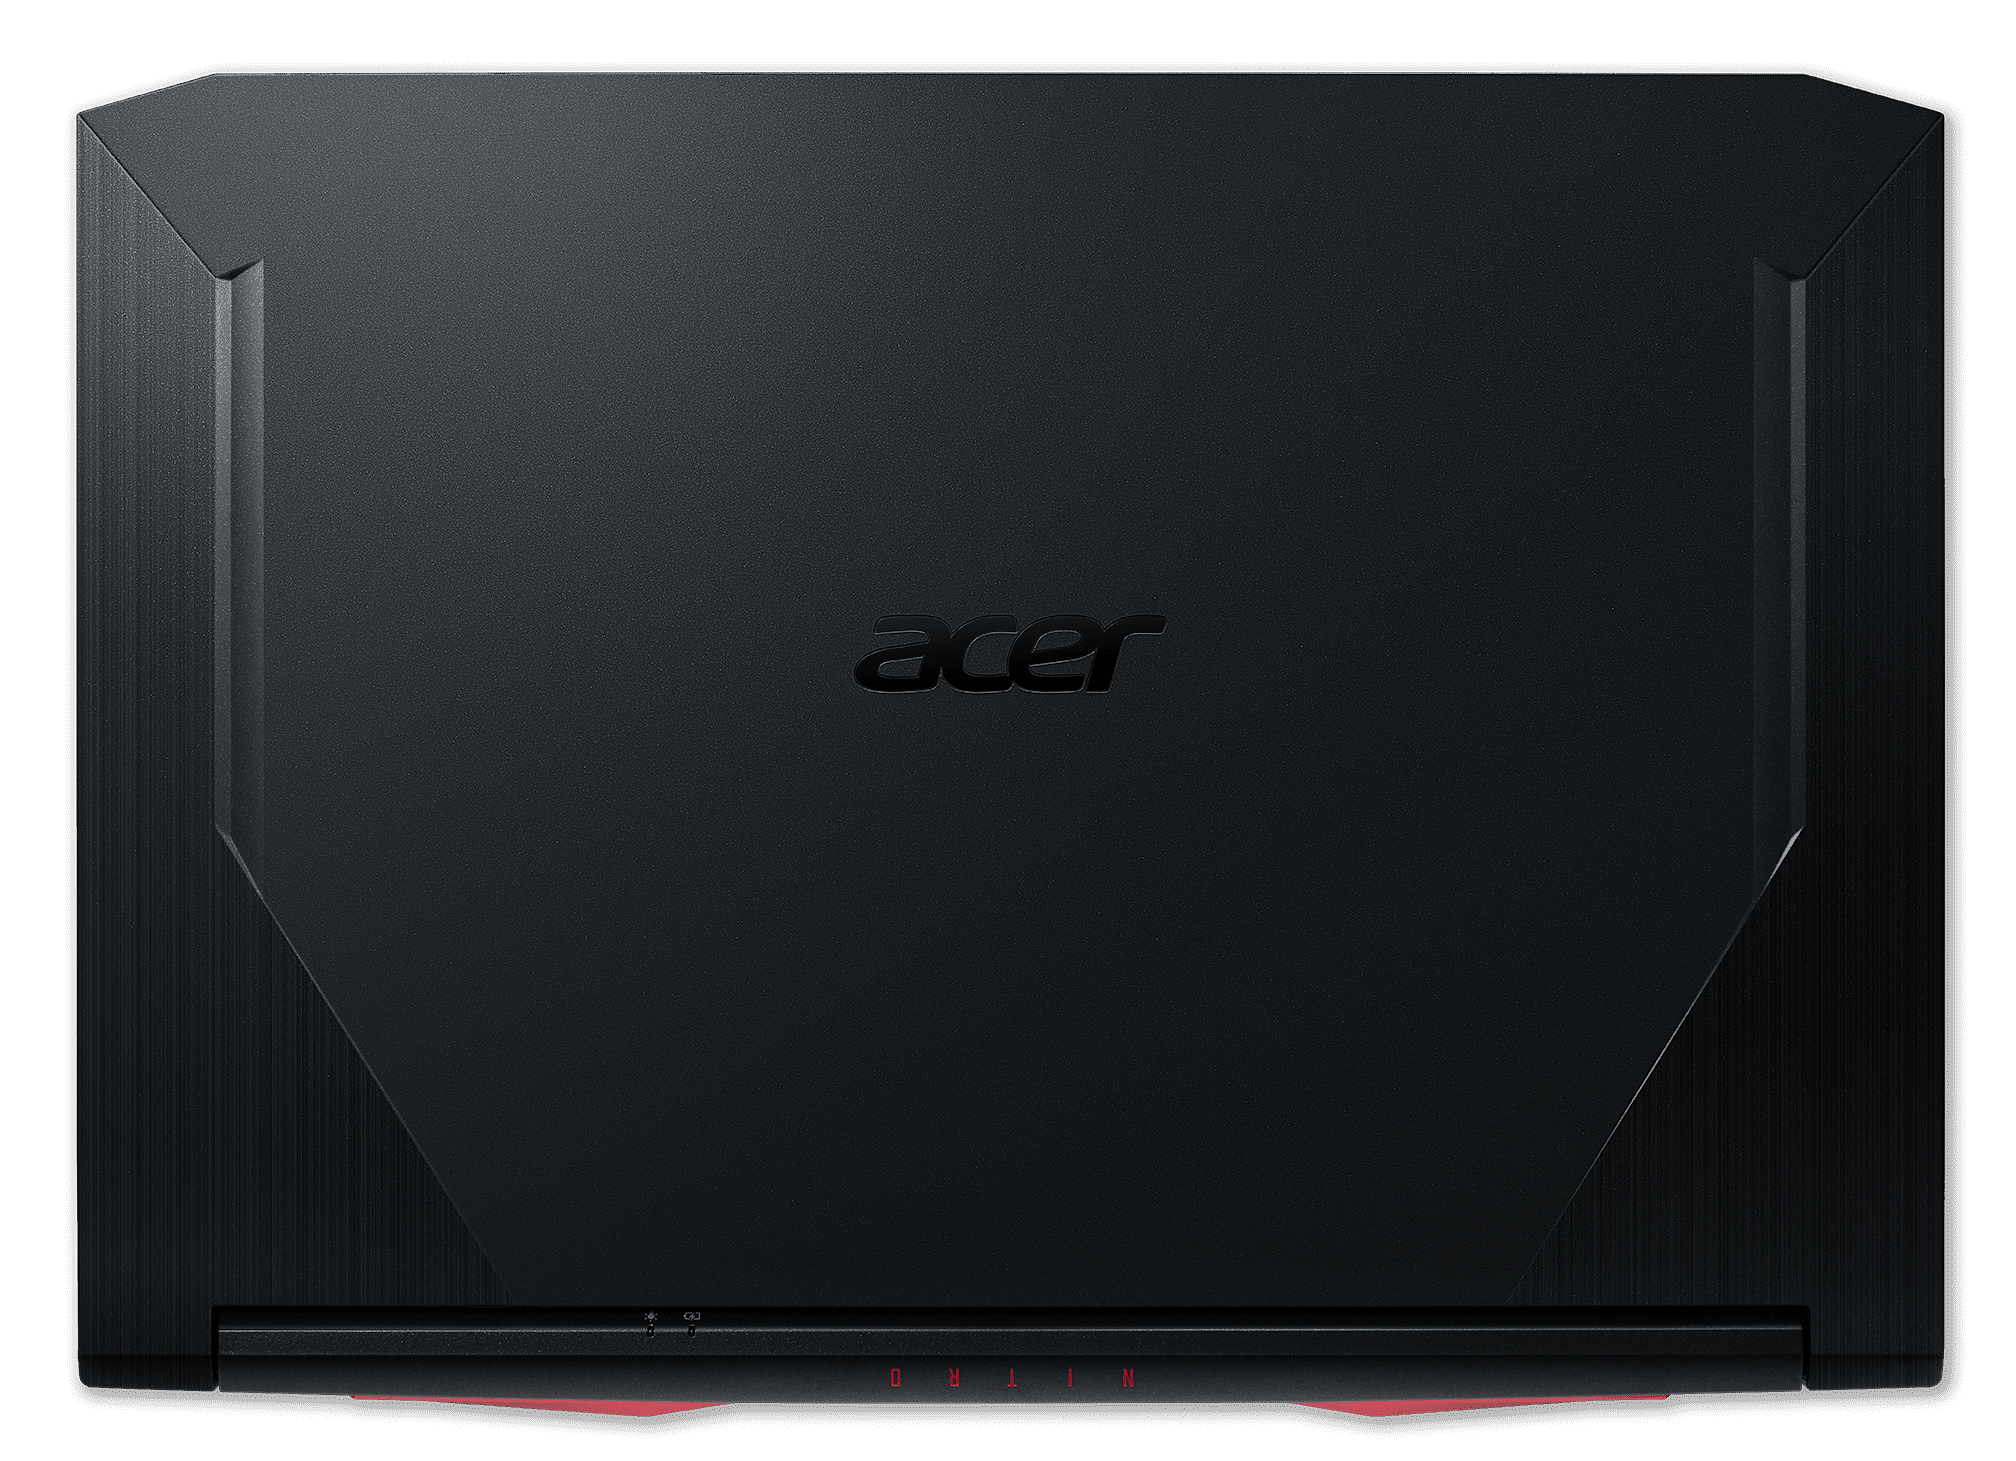 Acer Nitro 5 i5 RTX 3050Ti Gaming Laptop, 15.6 FHD 144Hz IPS Display,  Intel Core i5-10300H, NVIDIA GeForce RTX 3050Ti, 16GB DDR4, 512GB NVMe SSD,  Black, Windows 10 Home, AN515-55-57C4 